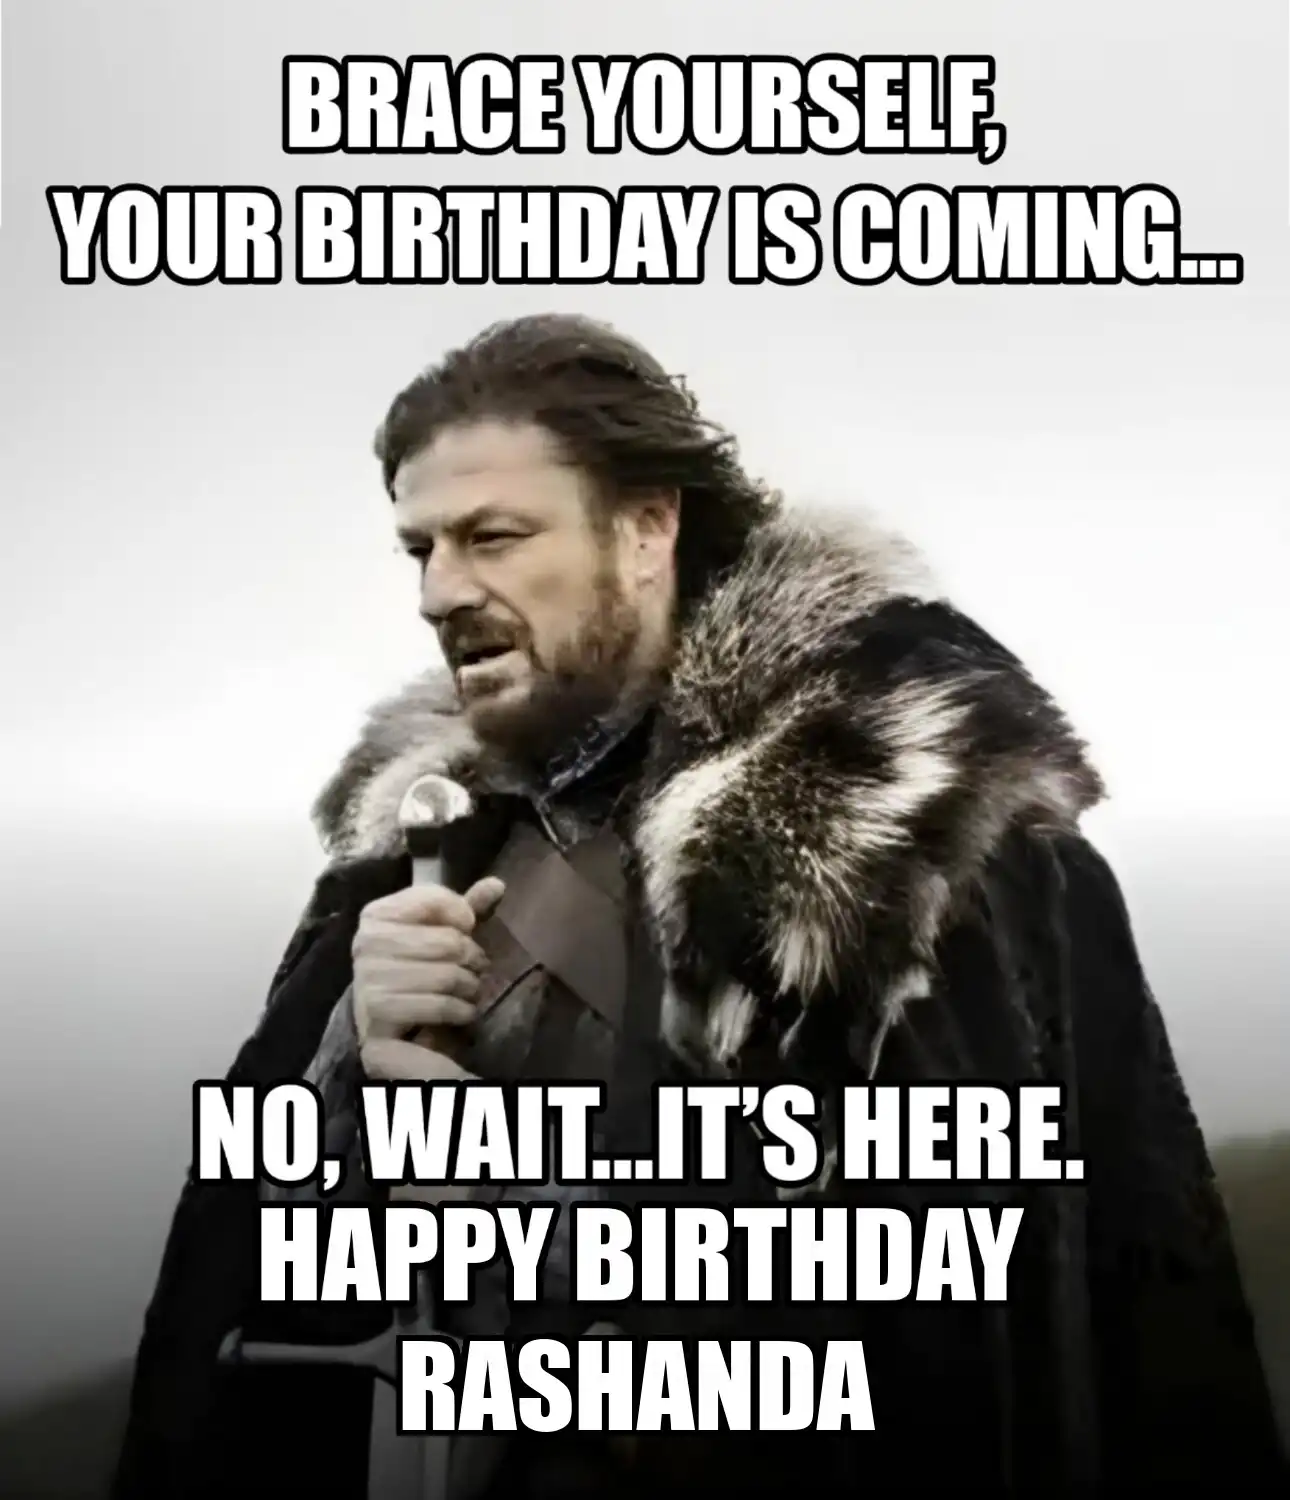 Happy Birthday Rashanda Brace Yourself Your Birthday Is Coming Meme